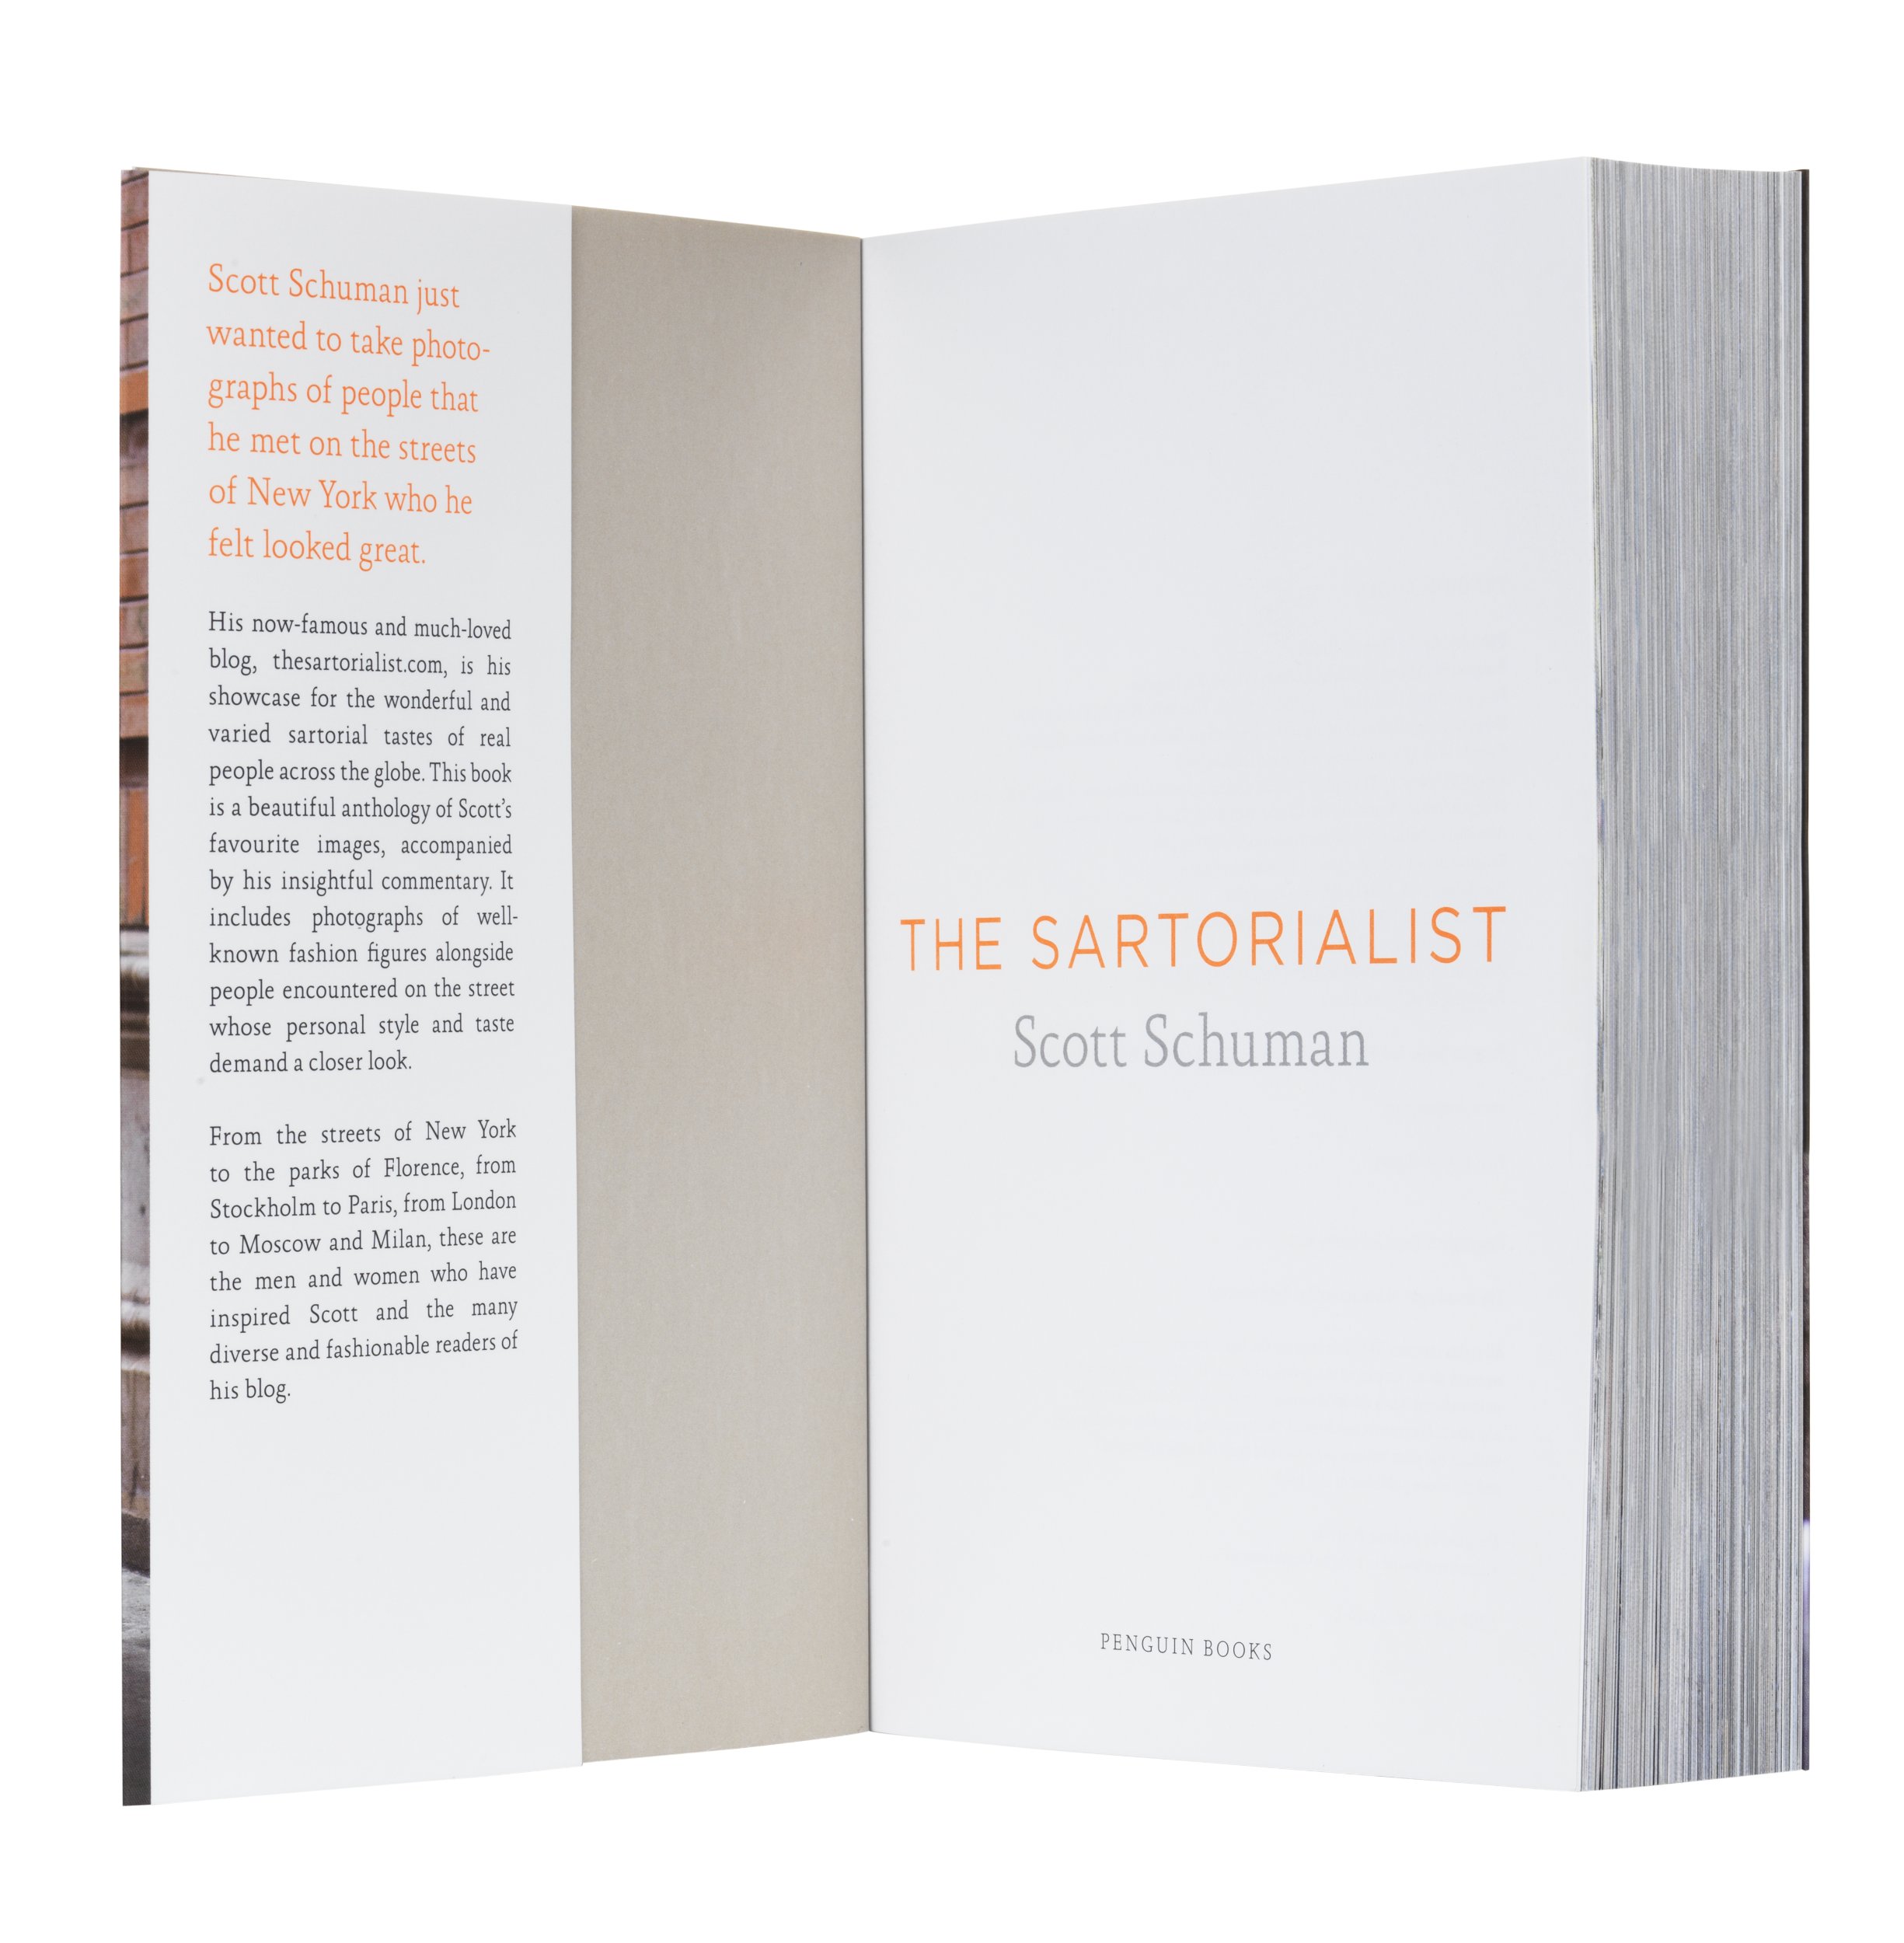 The Sartorialist: Amazon.co.uk: Scott Schuman: 9781846142505: Books